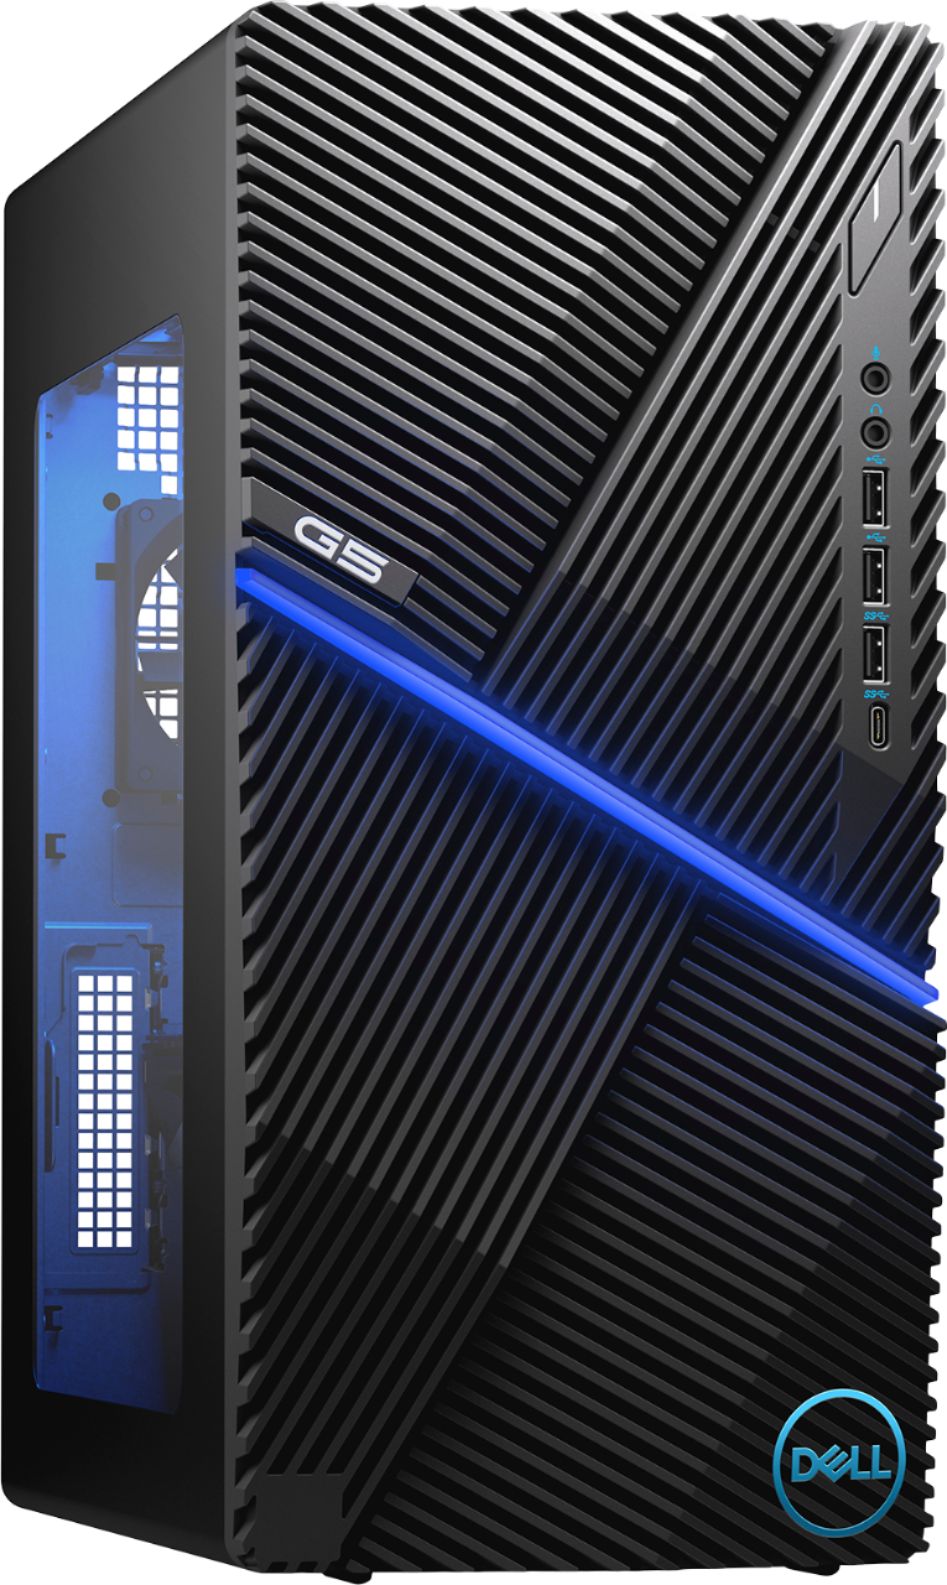 Dell G5 Gaming Desktop Intel Core I7 f 16gb Ram Nvidia Geforce Gtx 1660 Ti 1tb Ssd No Odd Black Clear Side Panel I5000 7385blk Pus Best Buy